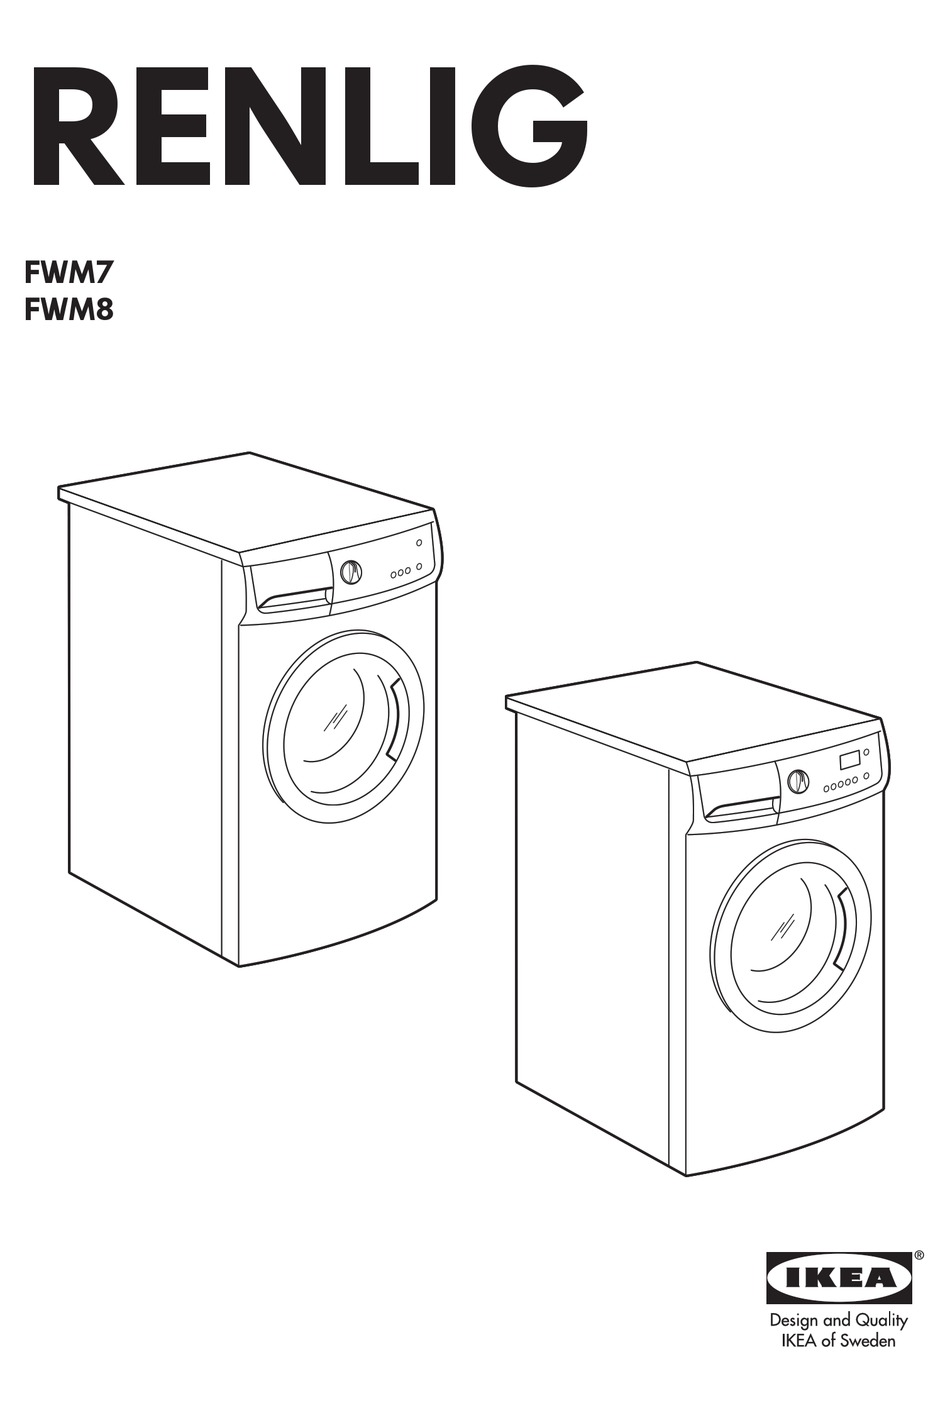 IKEA RENLIG FWM7 INSTRUCTION MANUAL Pdf Download | ManualsLib